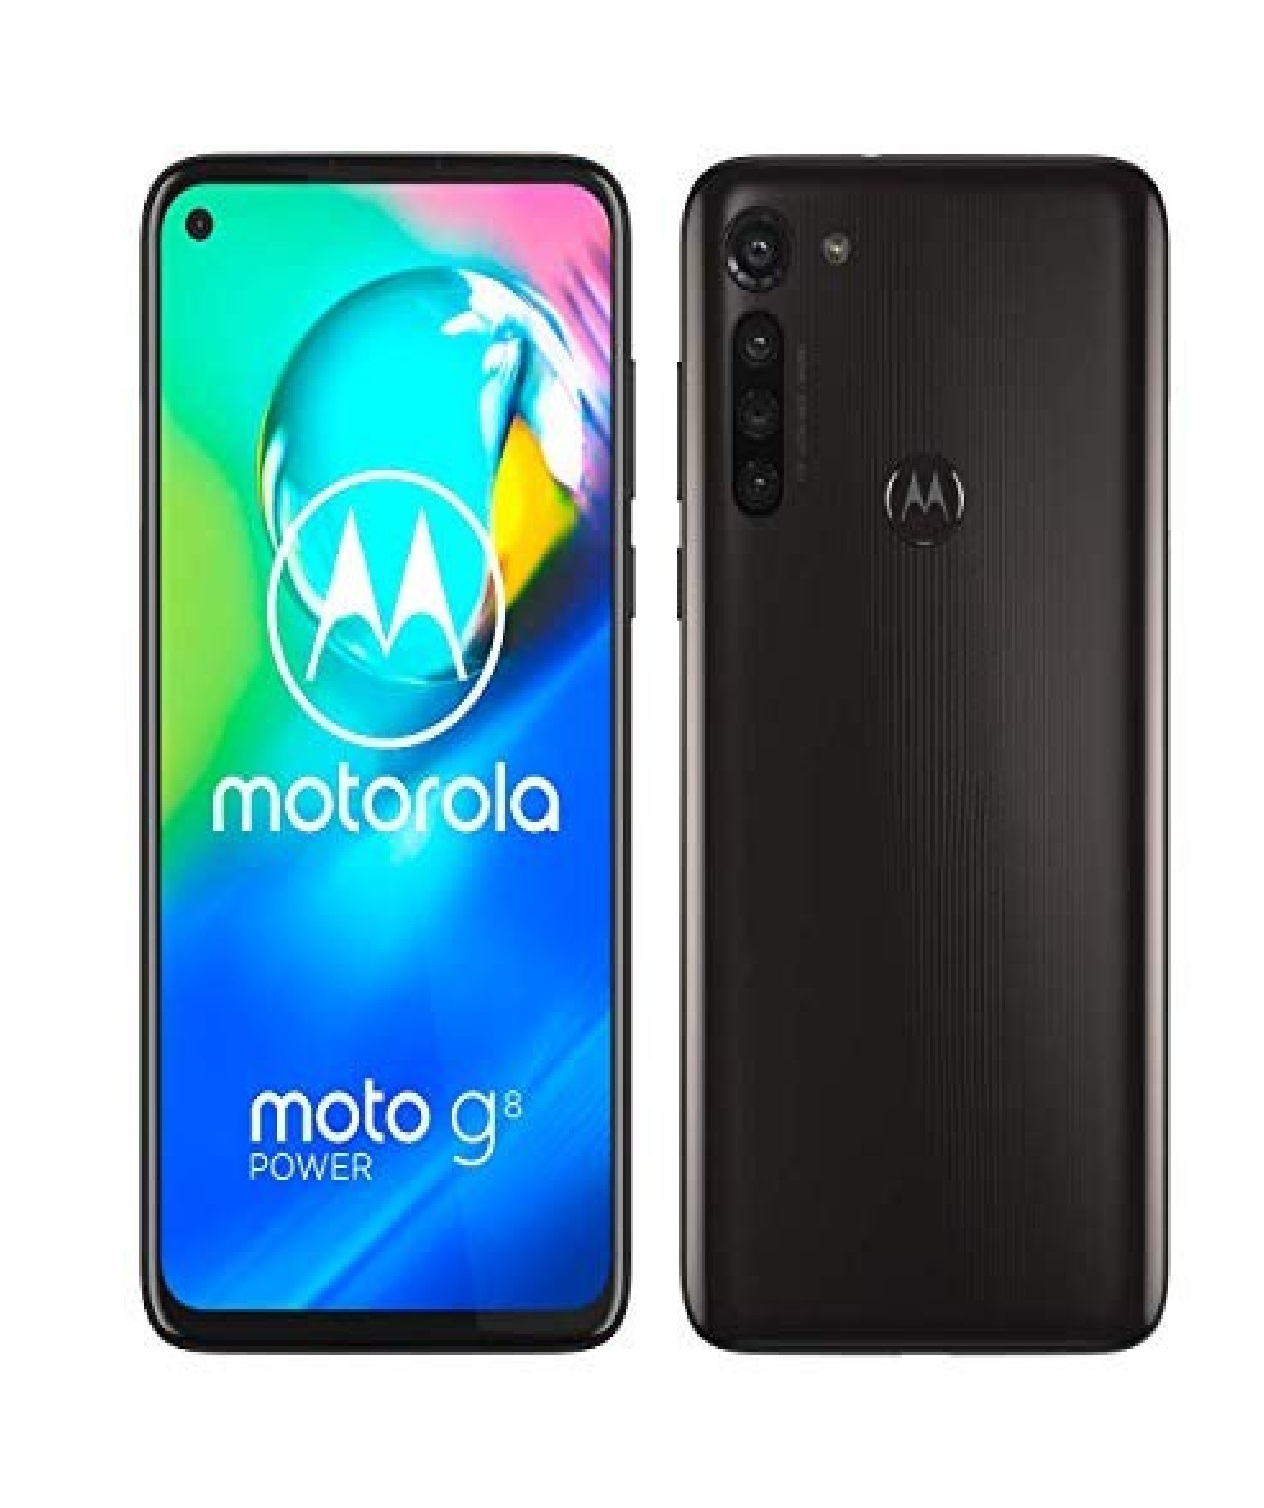 Motorola Moto G9 Power Official image 500x500 1